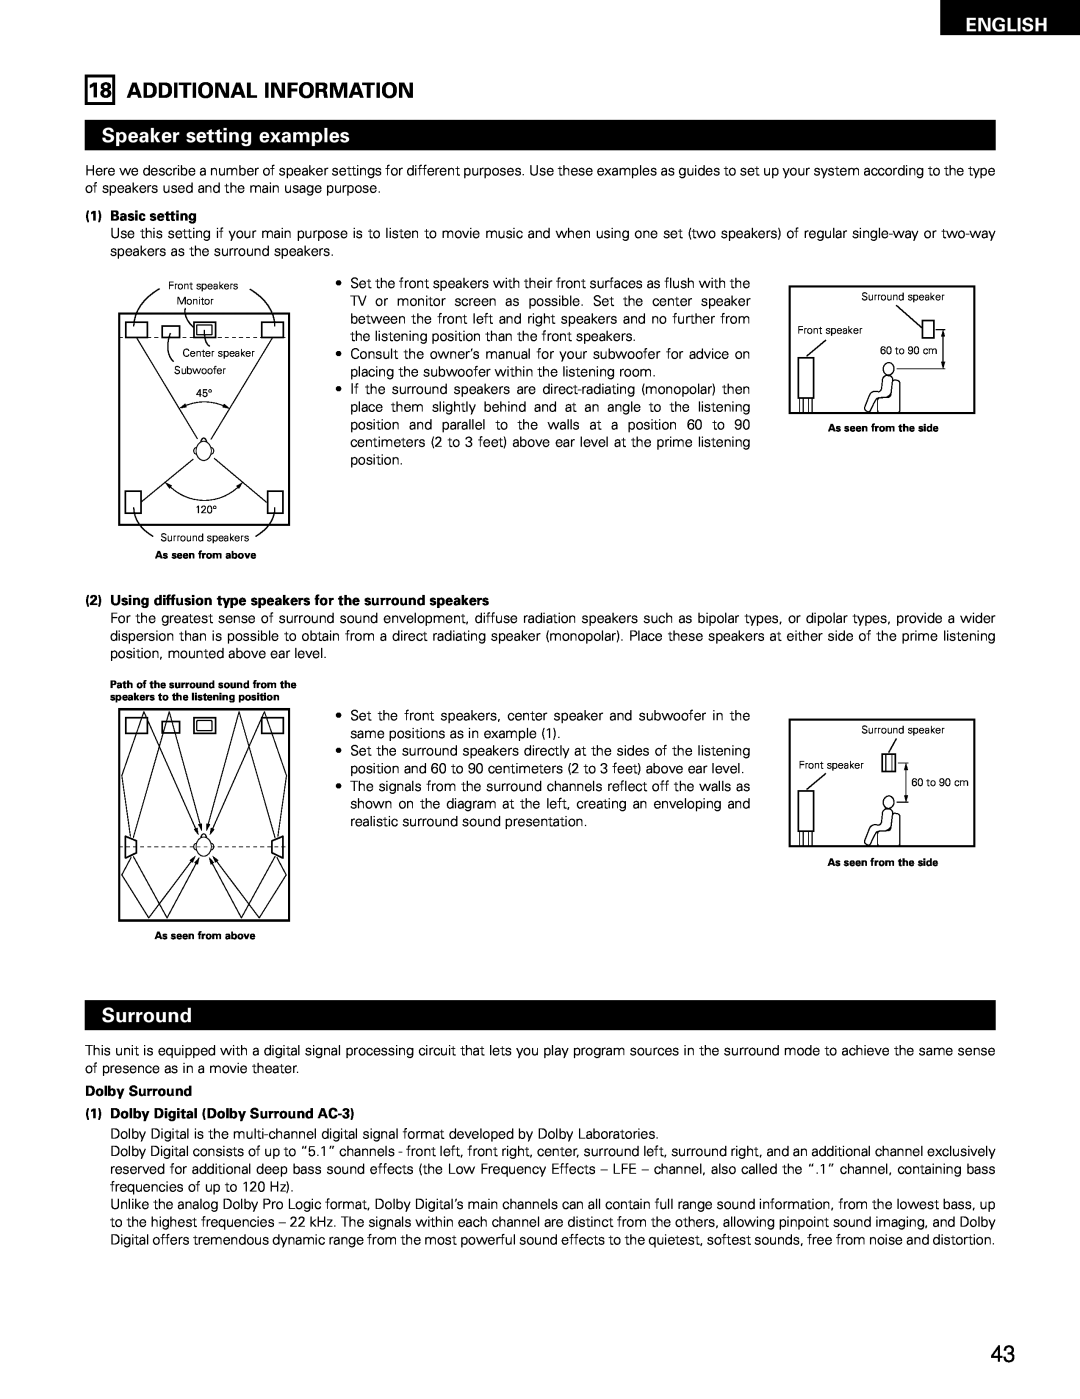 Denon AVR-682, AVR-1602 manual Additional Information, Speaker setting examples, Surround, English, 1Basic setting 